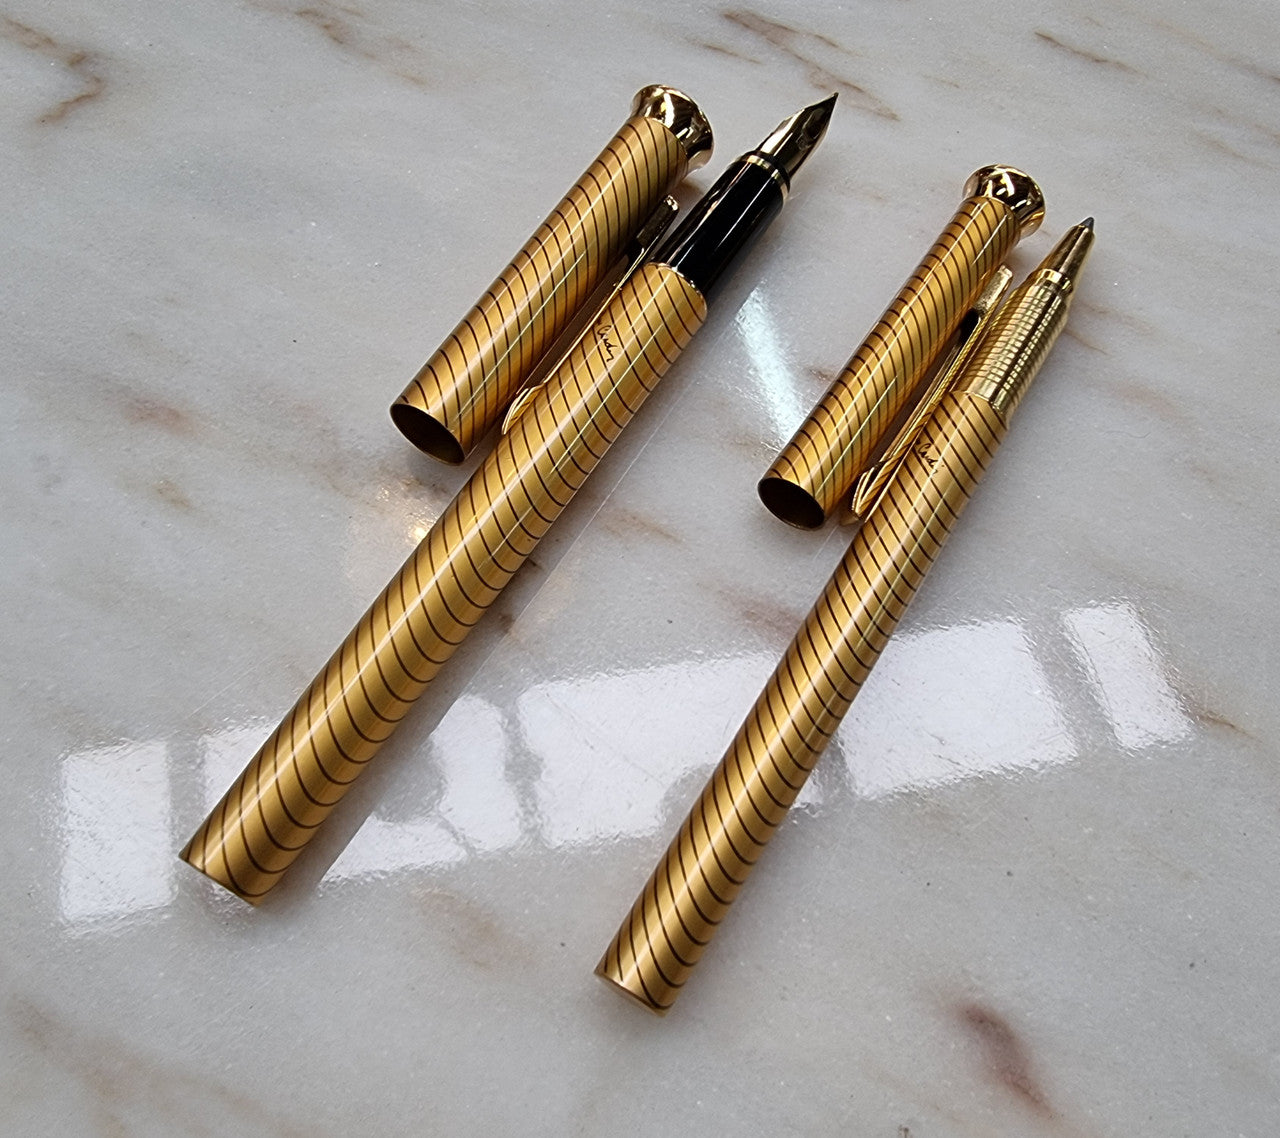 Beautiful Vintage Pierre Cardin pen and fountain pen set.